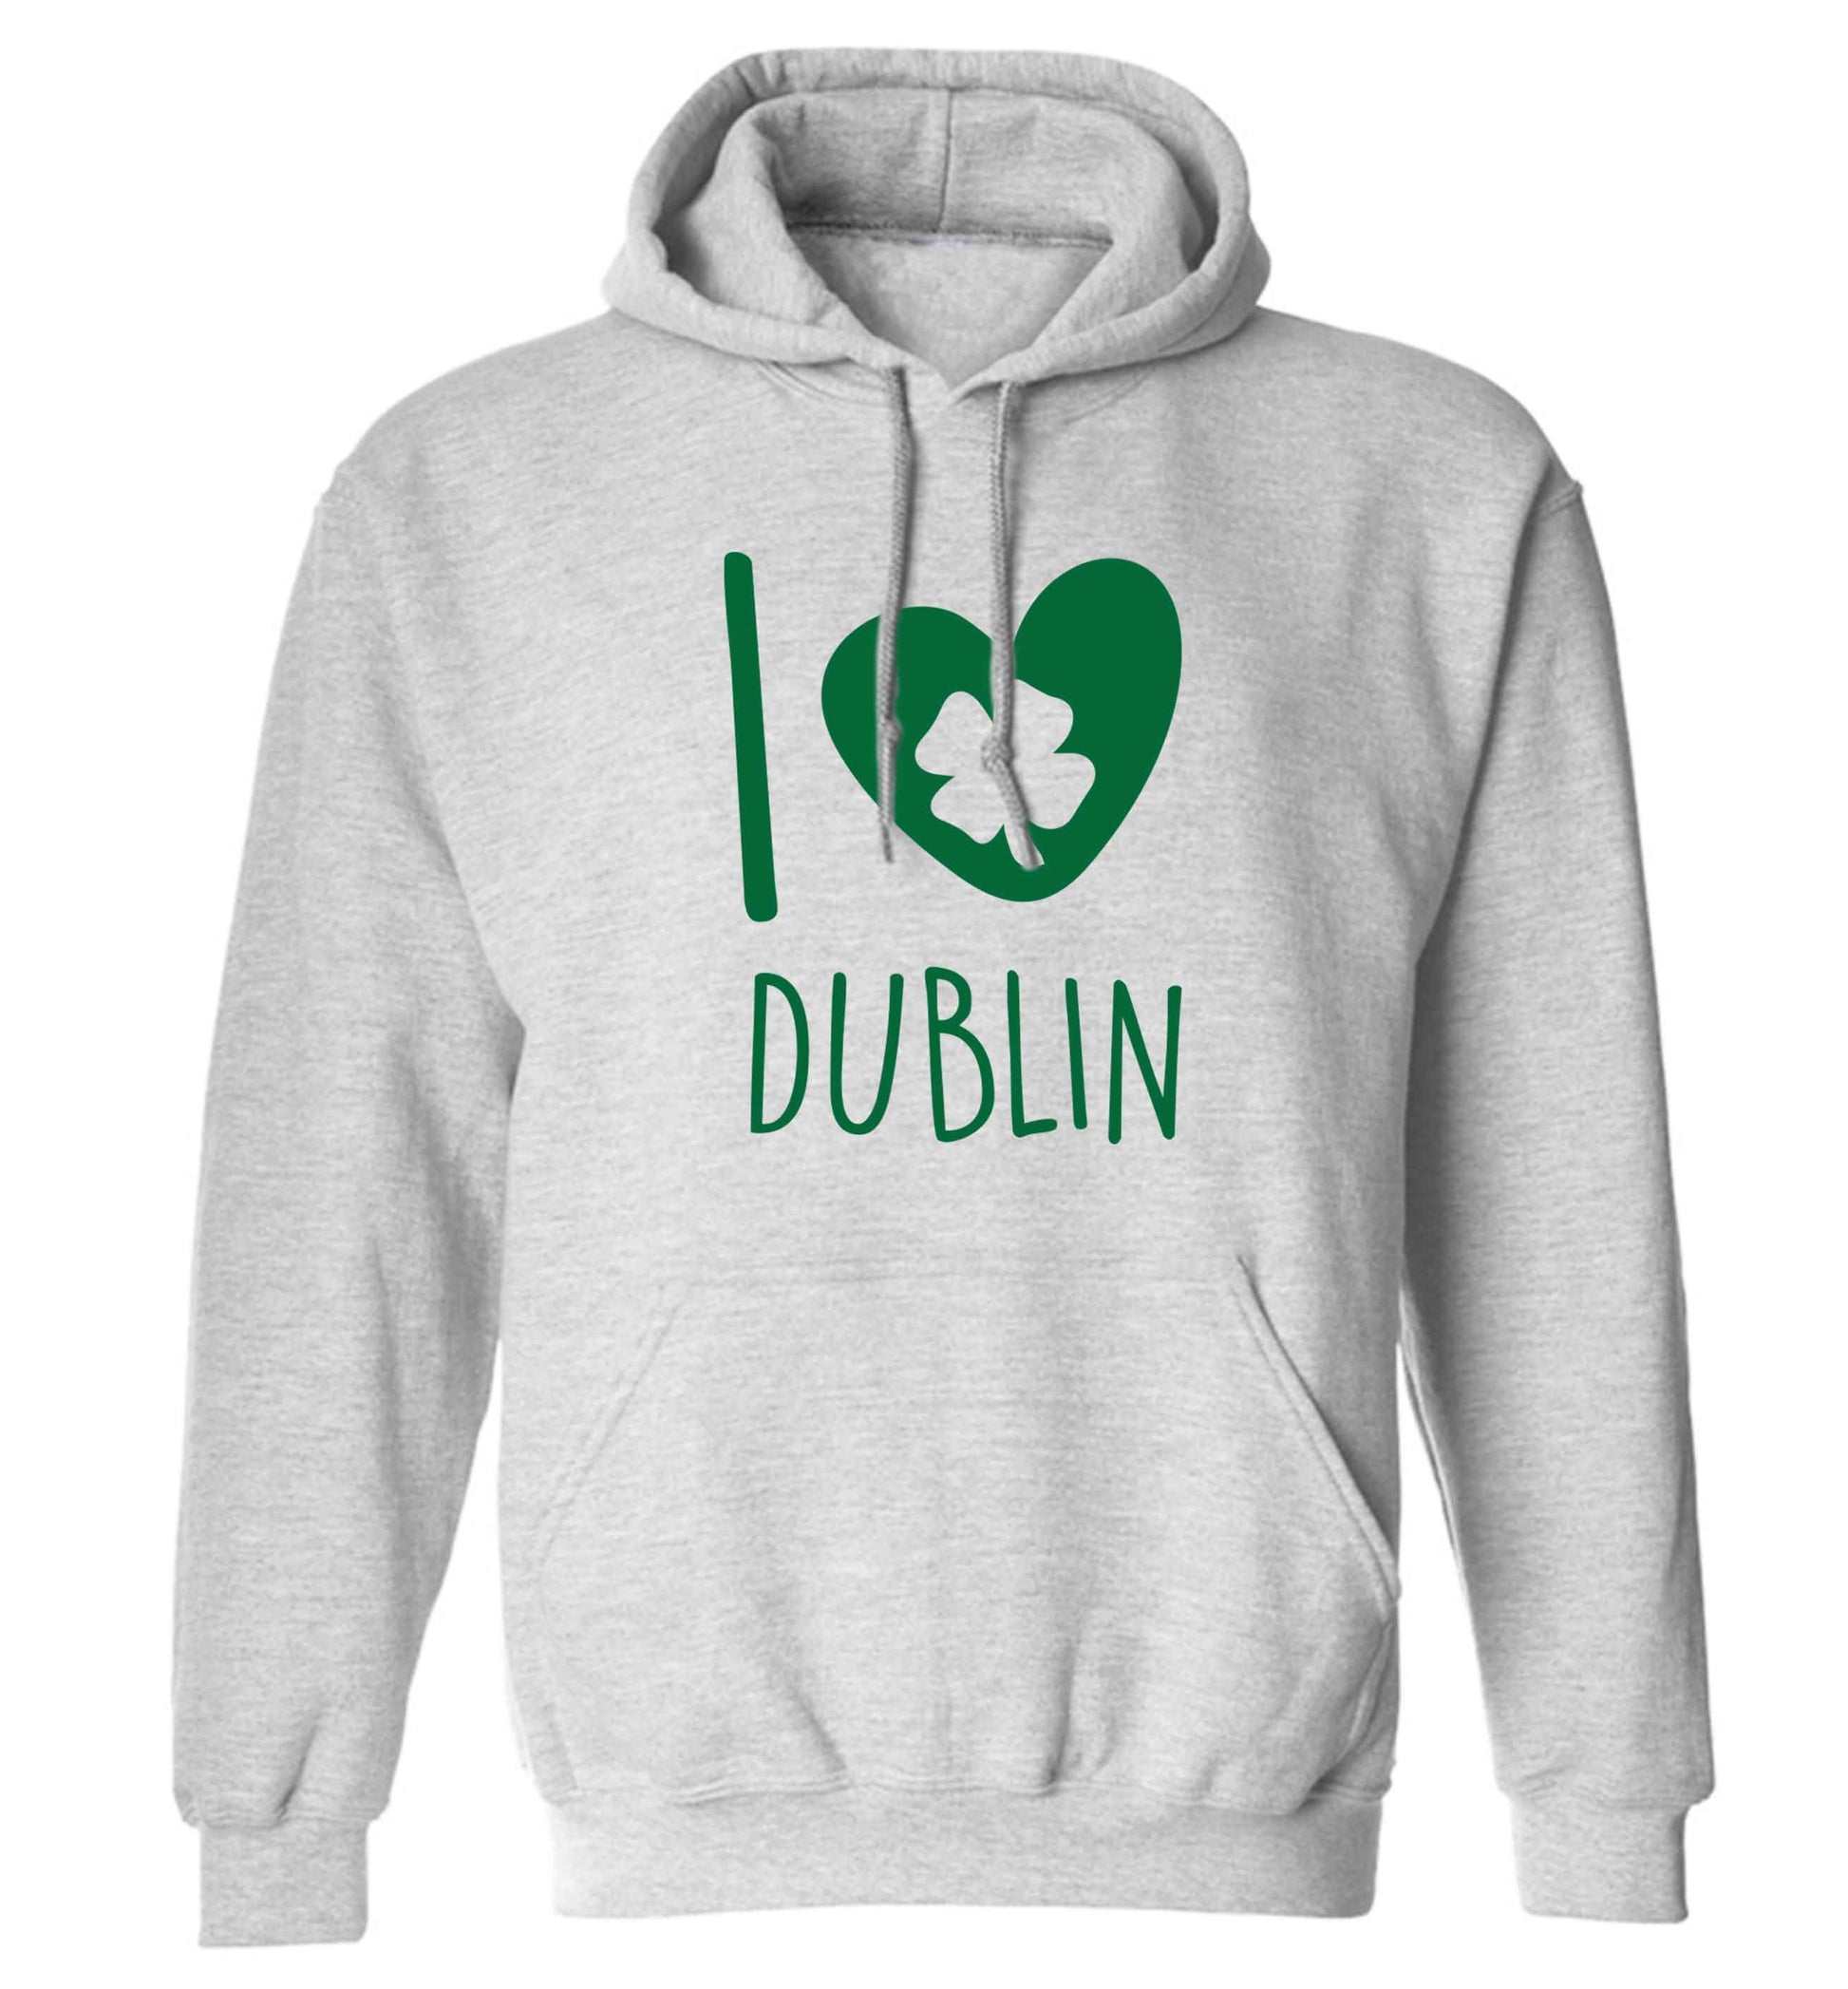 I love Dublin adults unisex grey hoodie 2XL